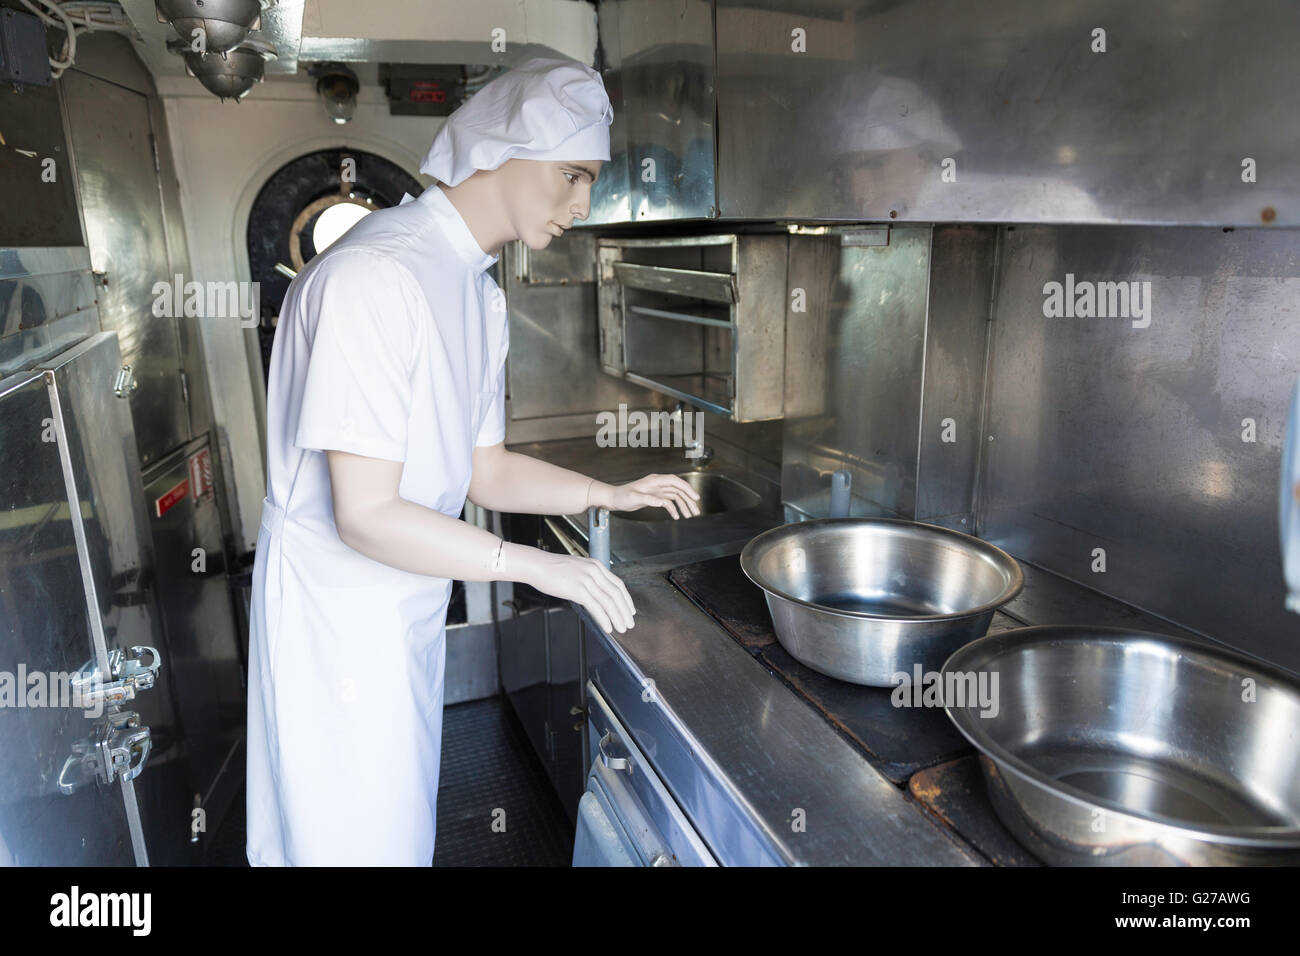 Un hombre maniqui cook en una cocina Foto de stock